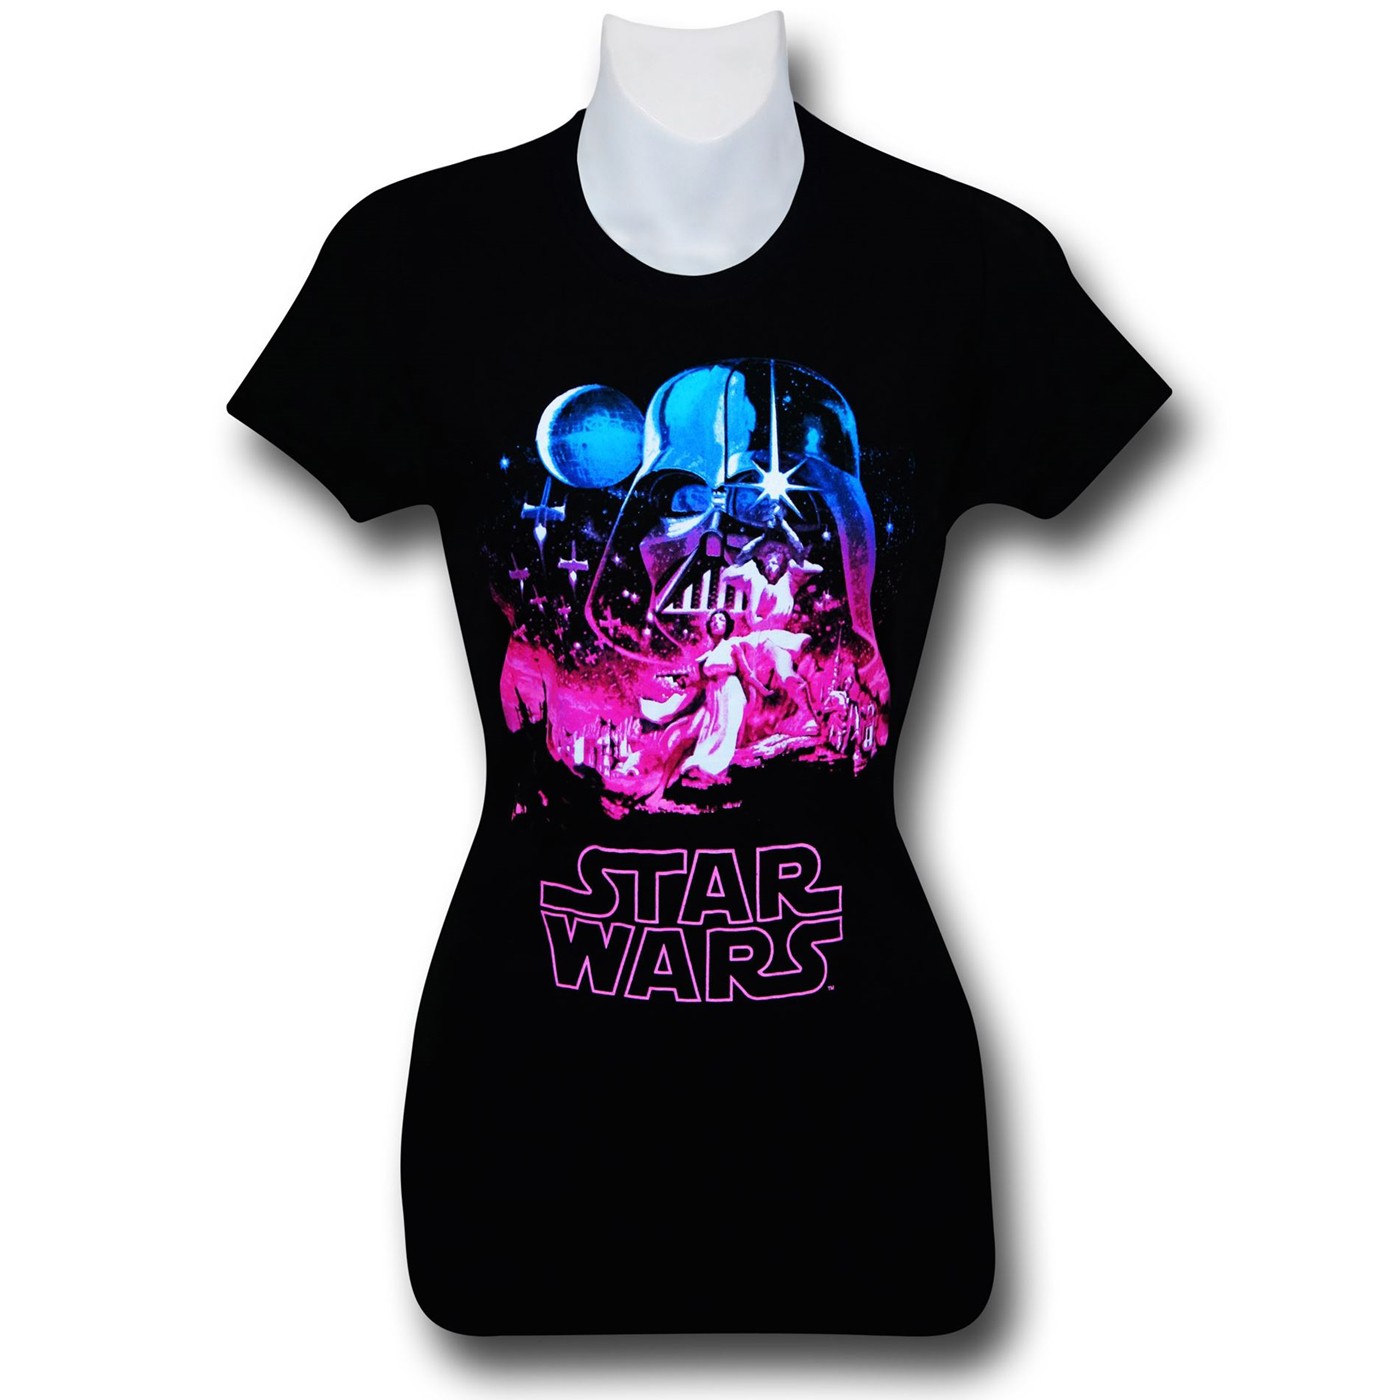 Star Wars Ultraviolet Women's T-Shirt